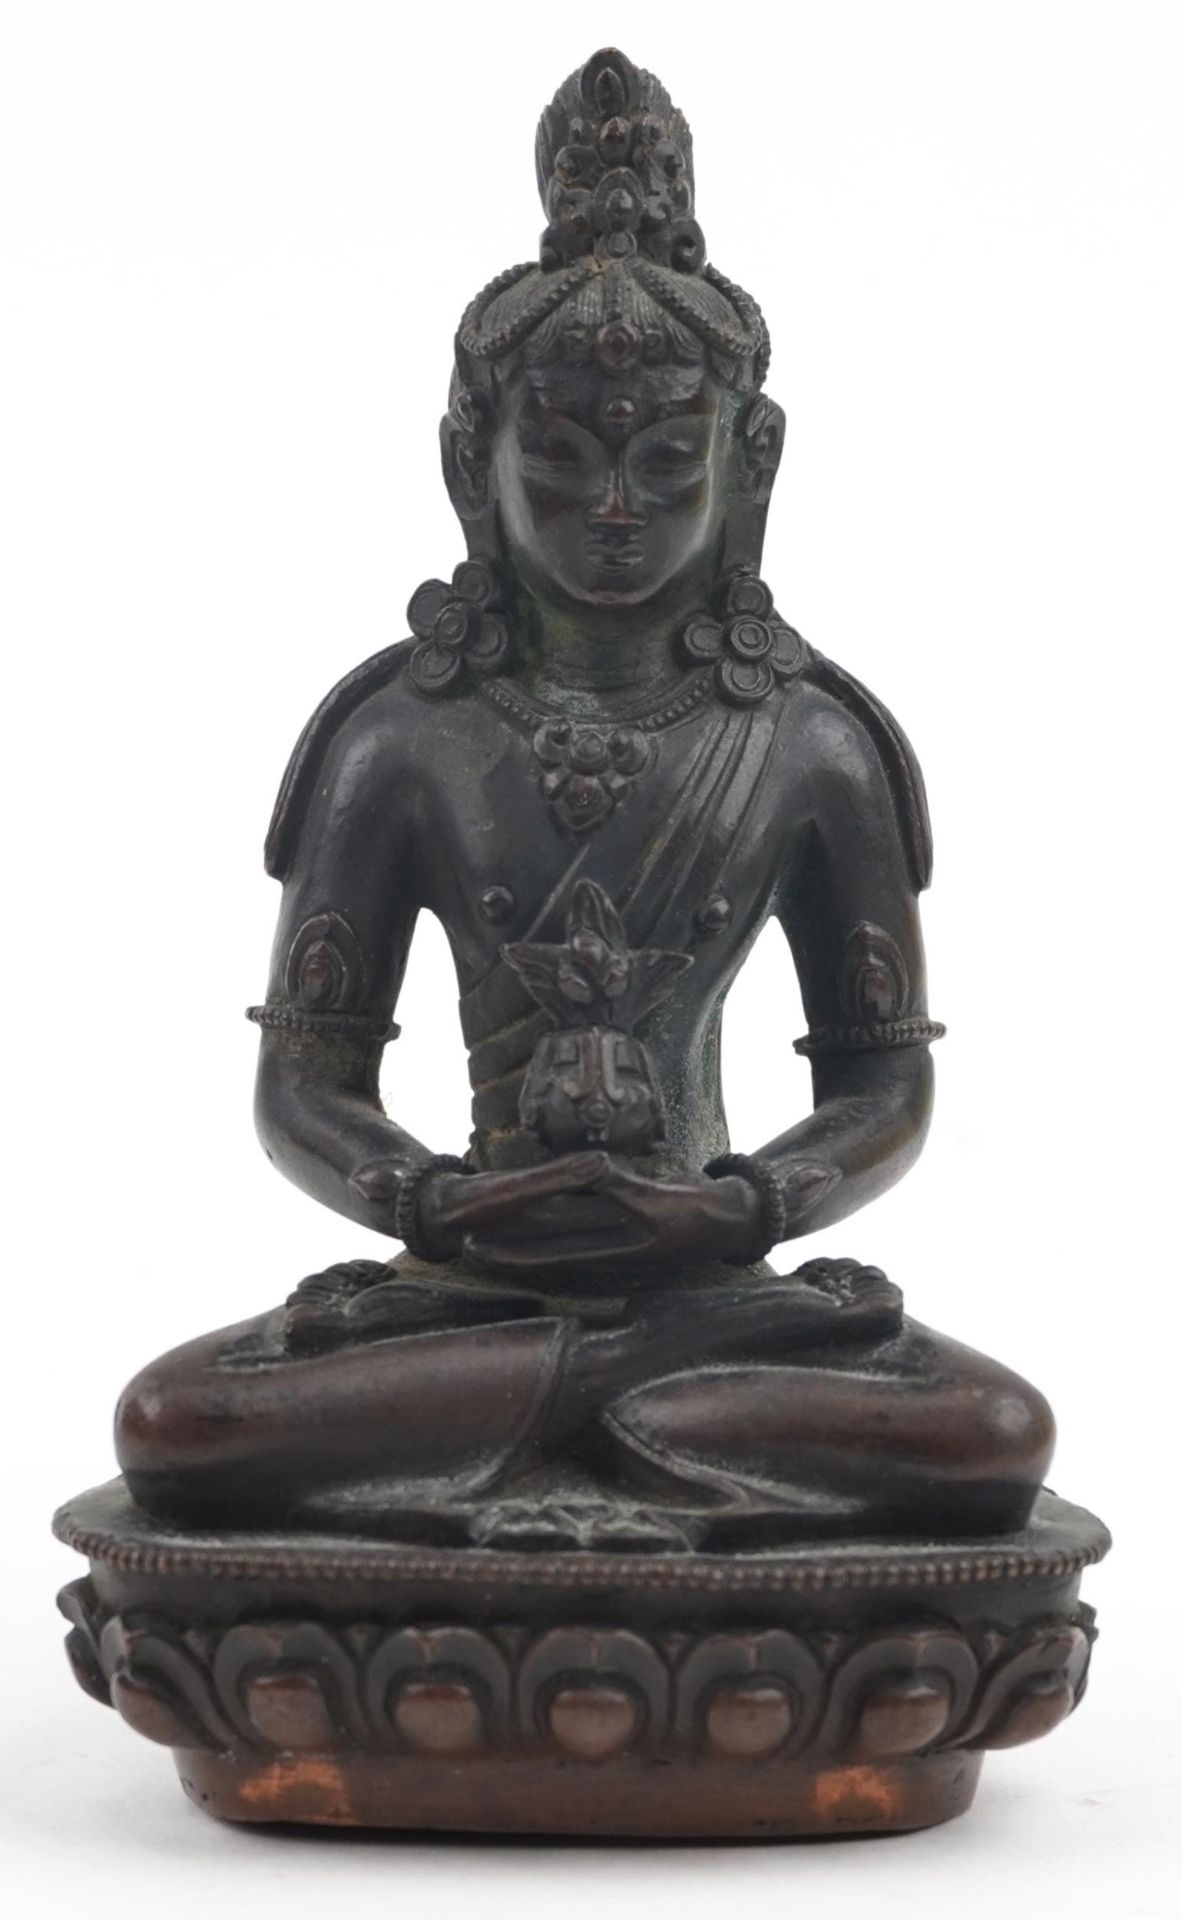 18th Century Chino Tibetan bronze/copper buddha figure of Tara, 15cms tall : For further information